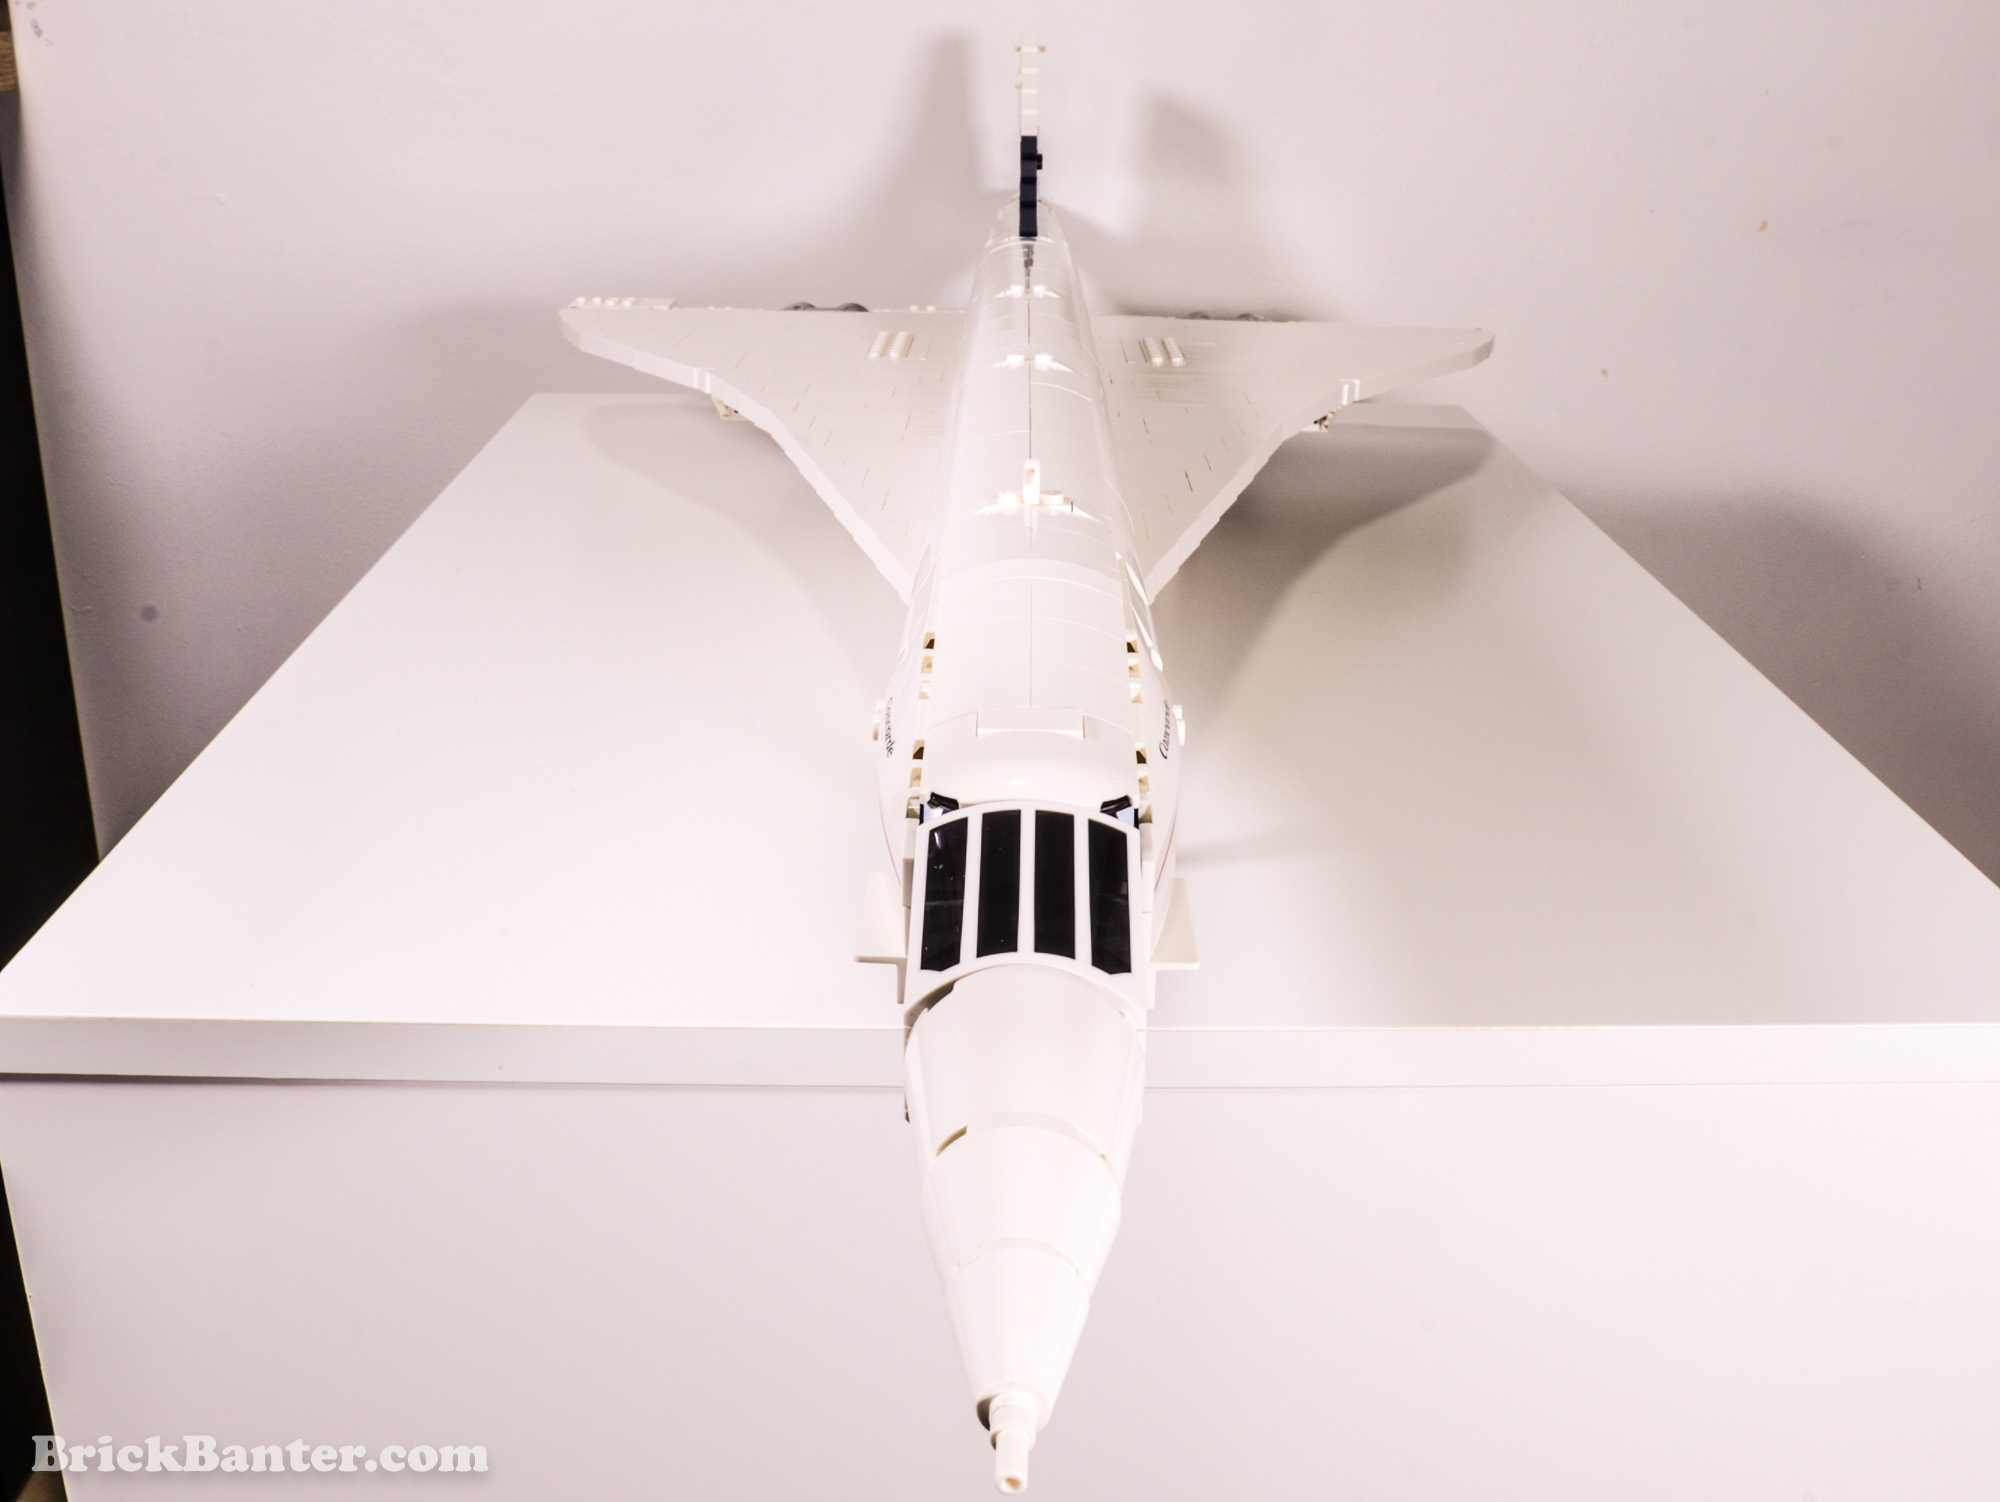 Review: Building LEGO's 2,083 Piece Concorde Model